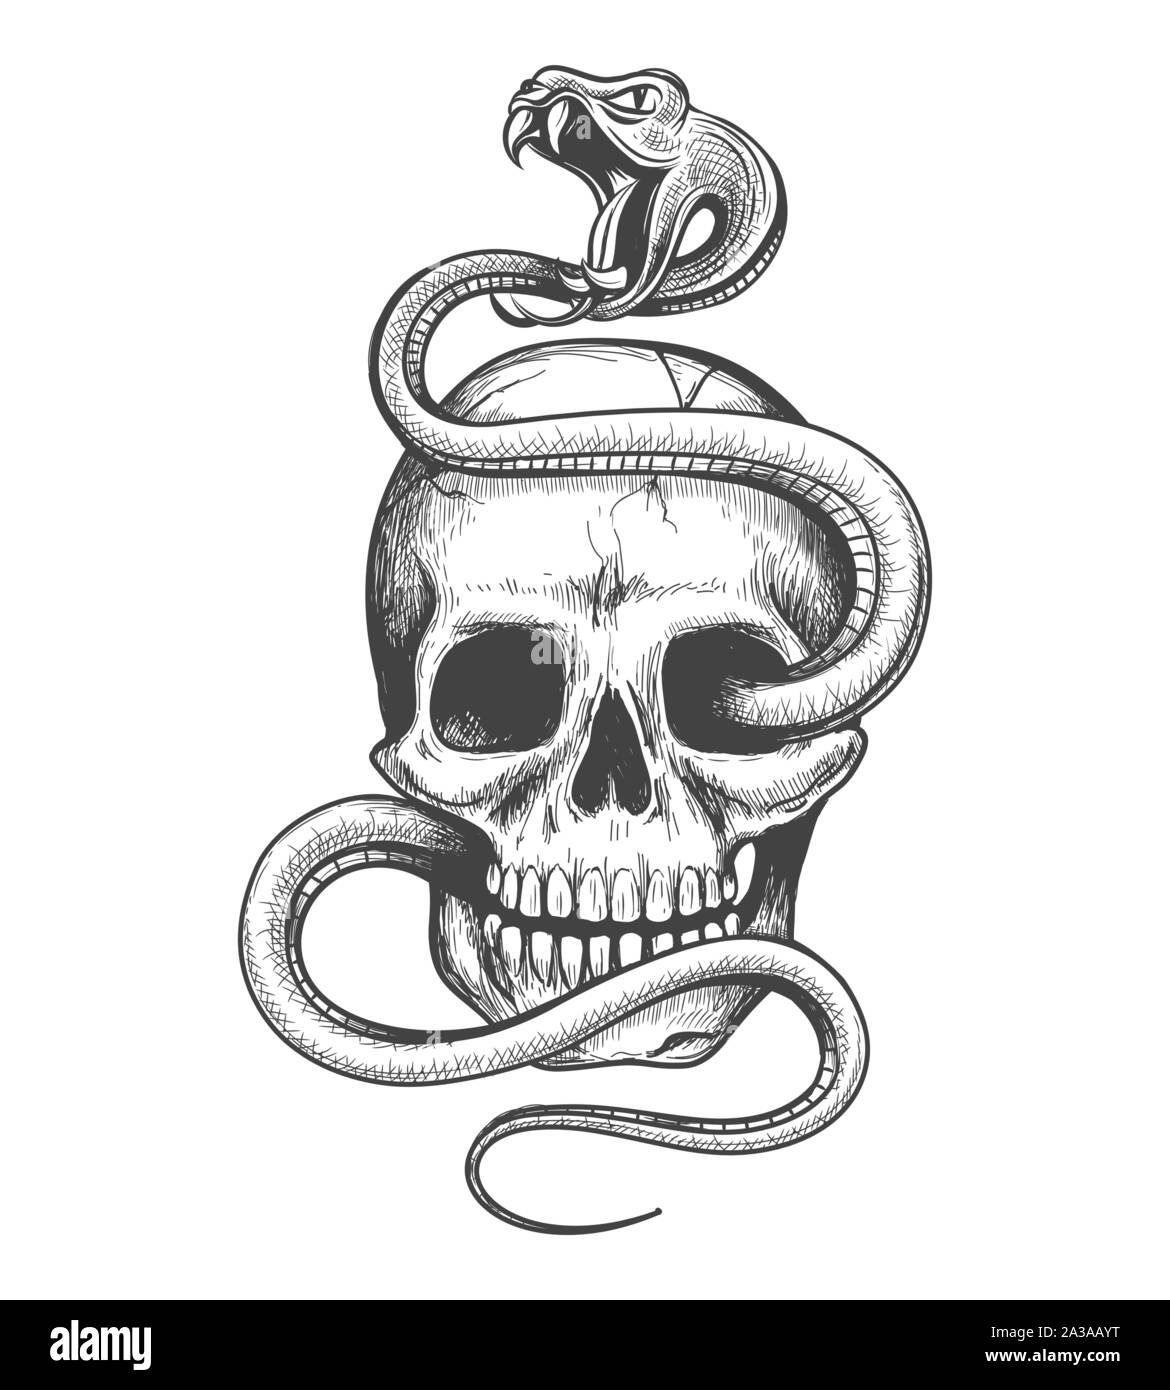 Skull and snake drawing Stock Vector